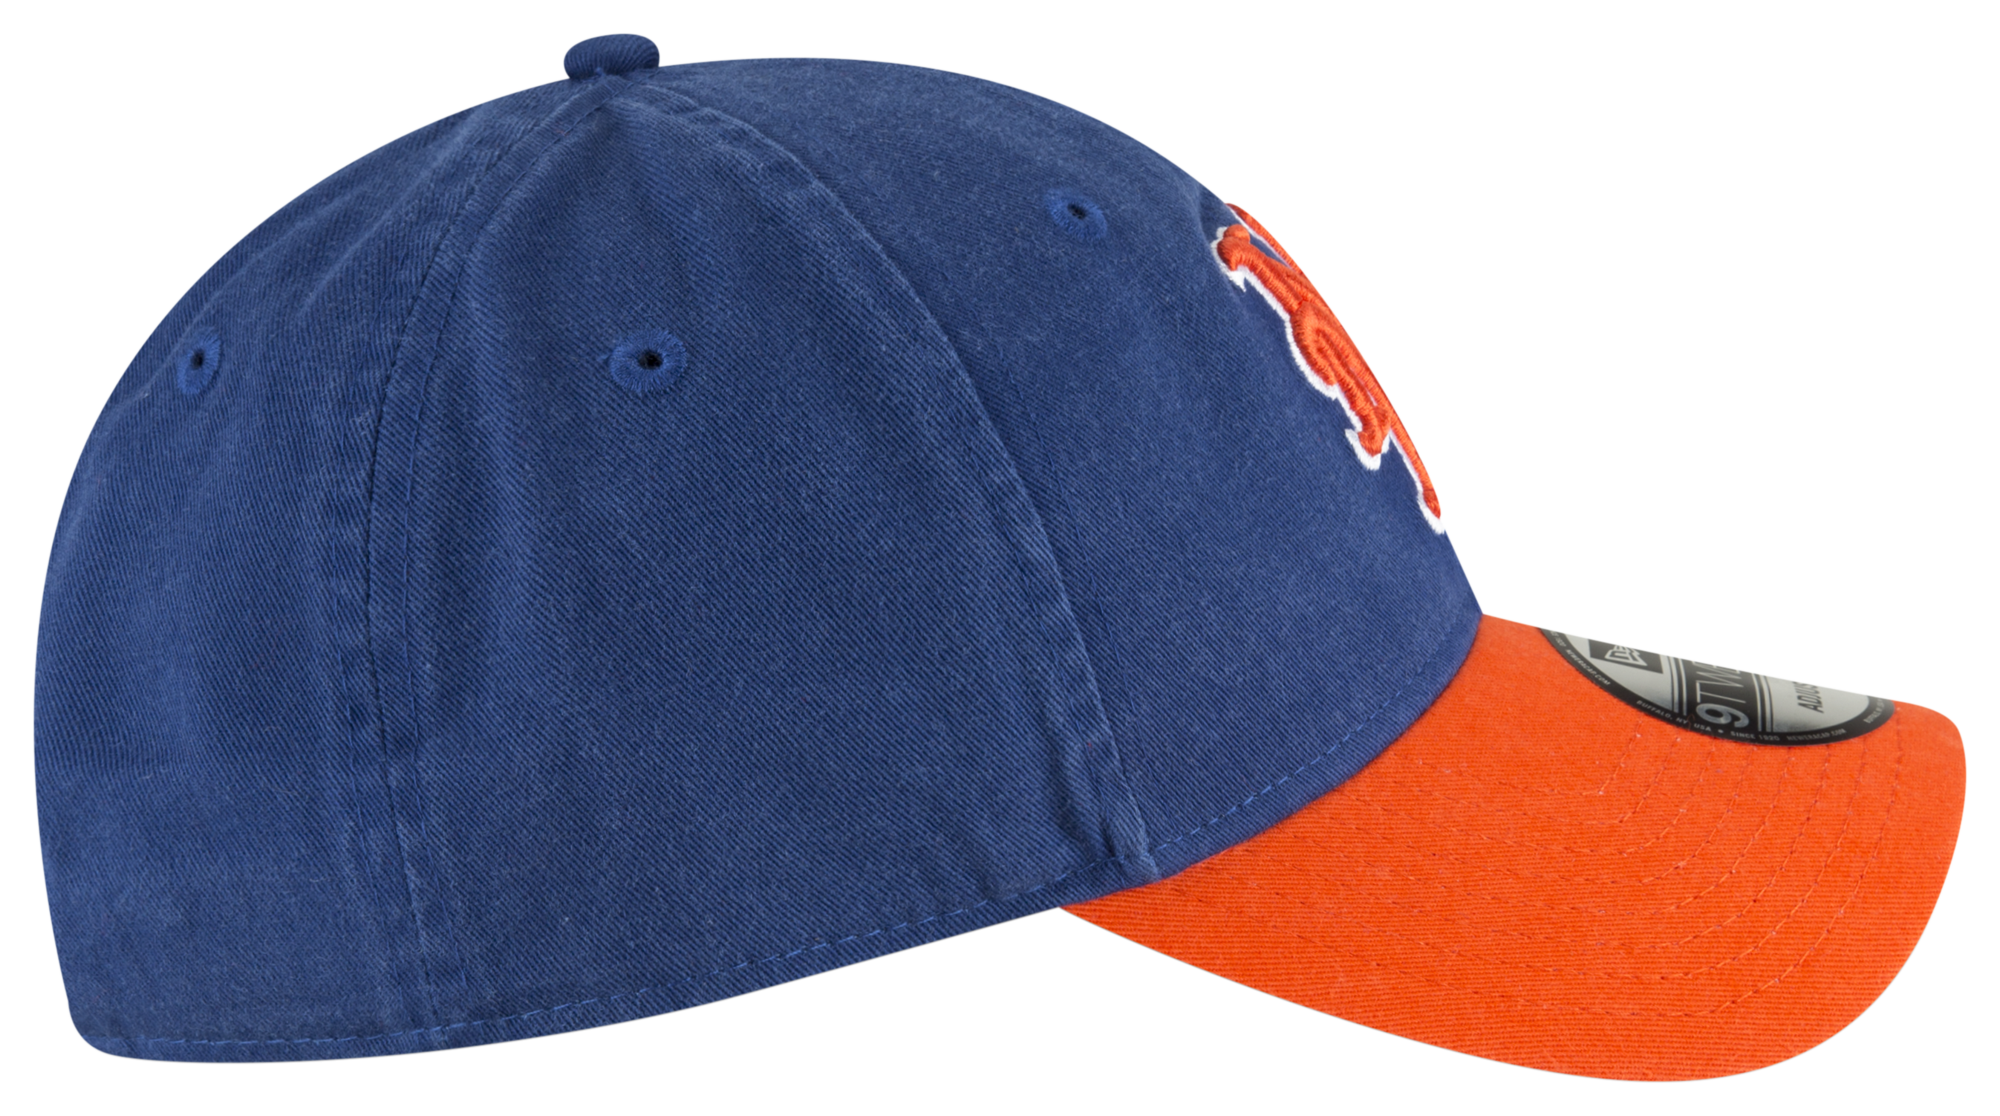 New Era Mets 2017 Alternate Cap